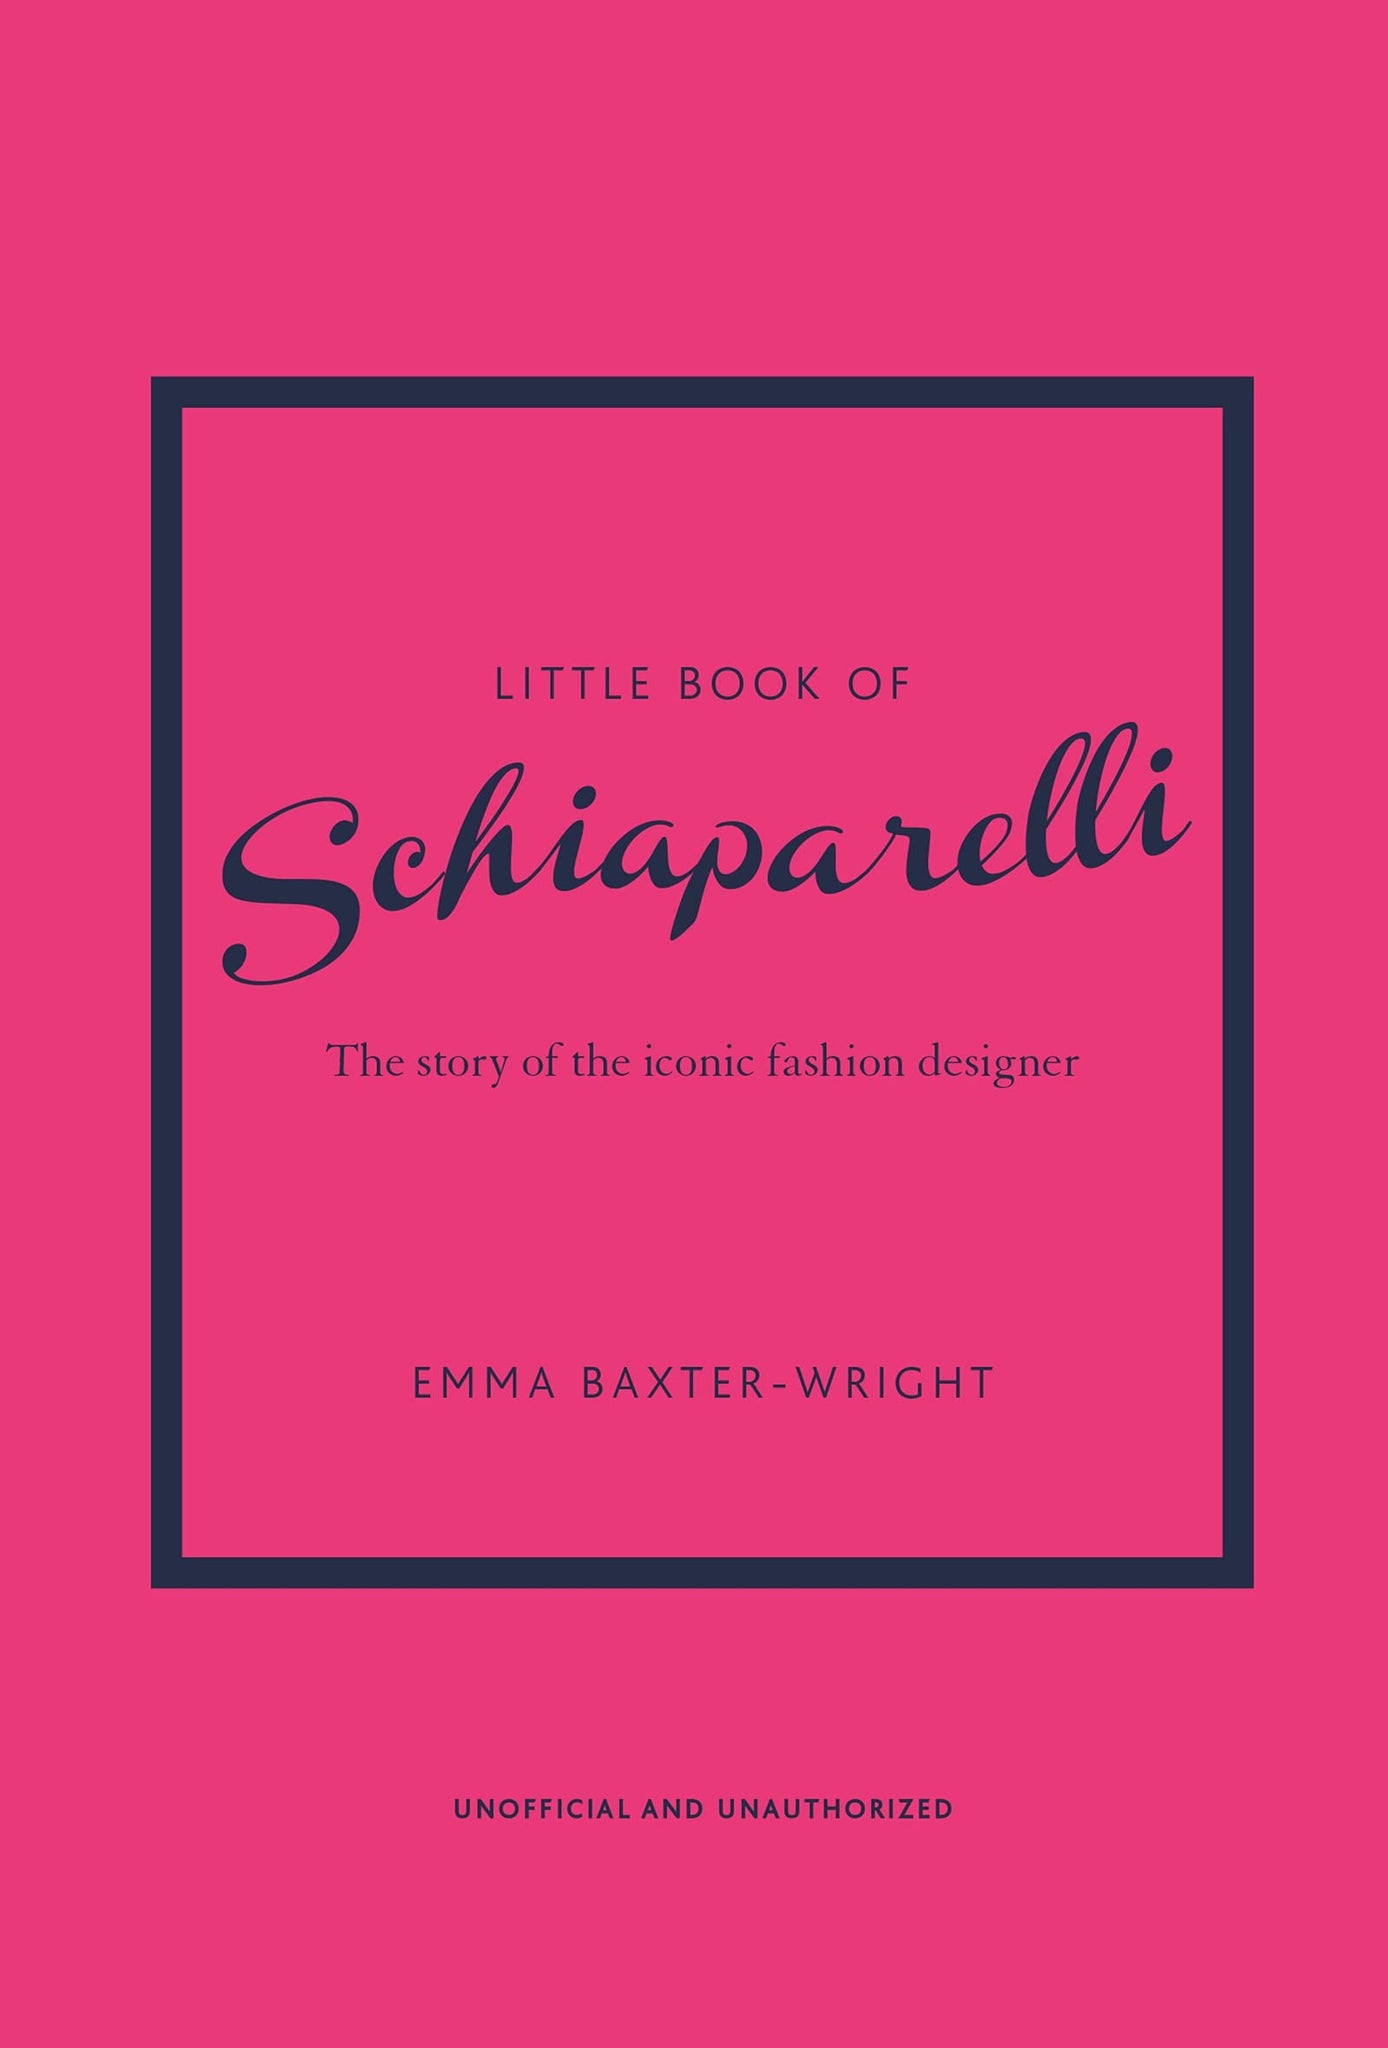 THE LITTLE BOOK OF SCHIAPARELLI